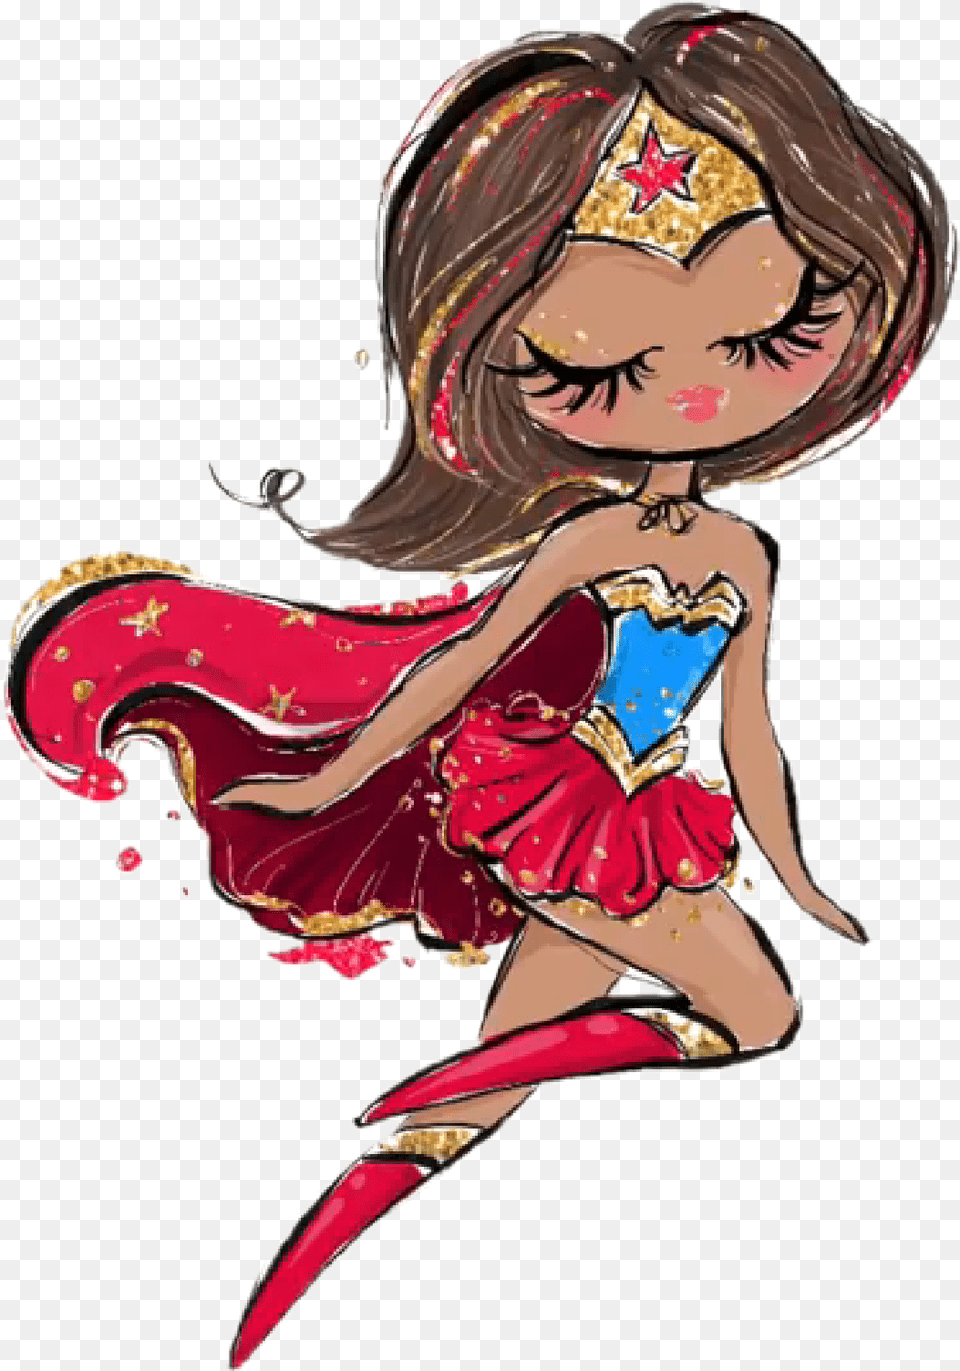 Watercolor Wonderwoman Wonder Woman Girl Superhero Illustration, Adult, Publication, Person, Female Png Image